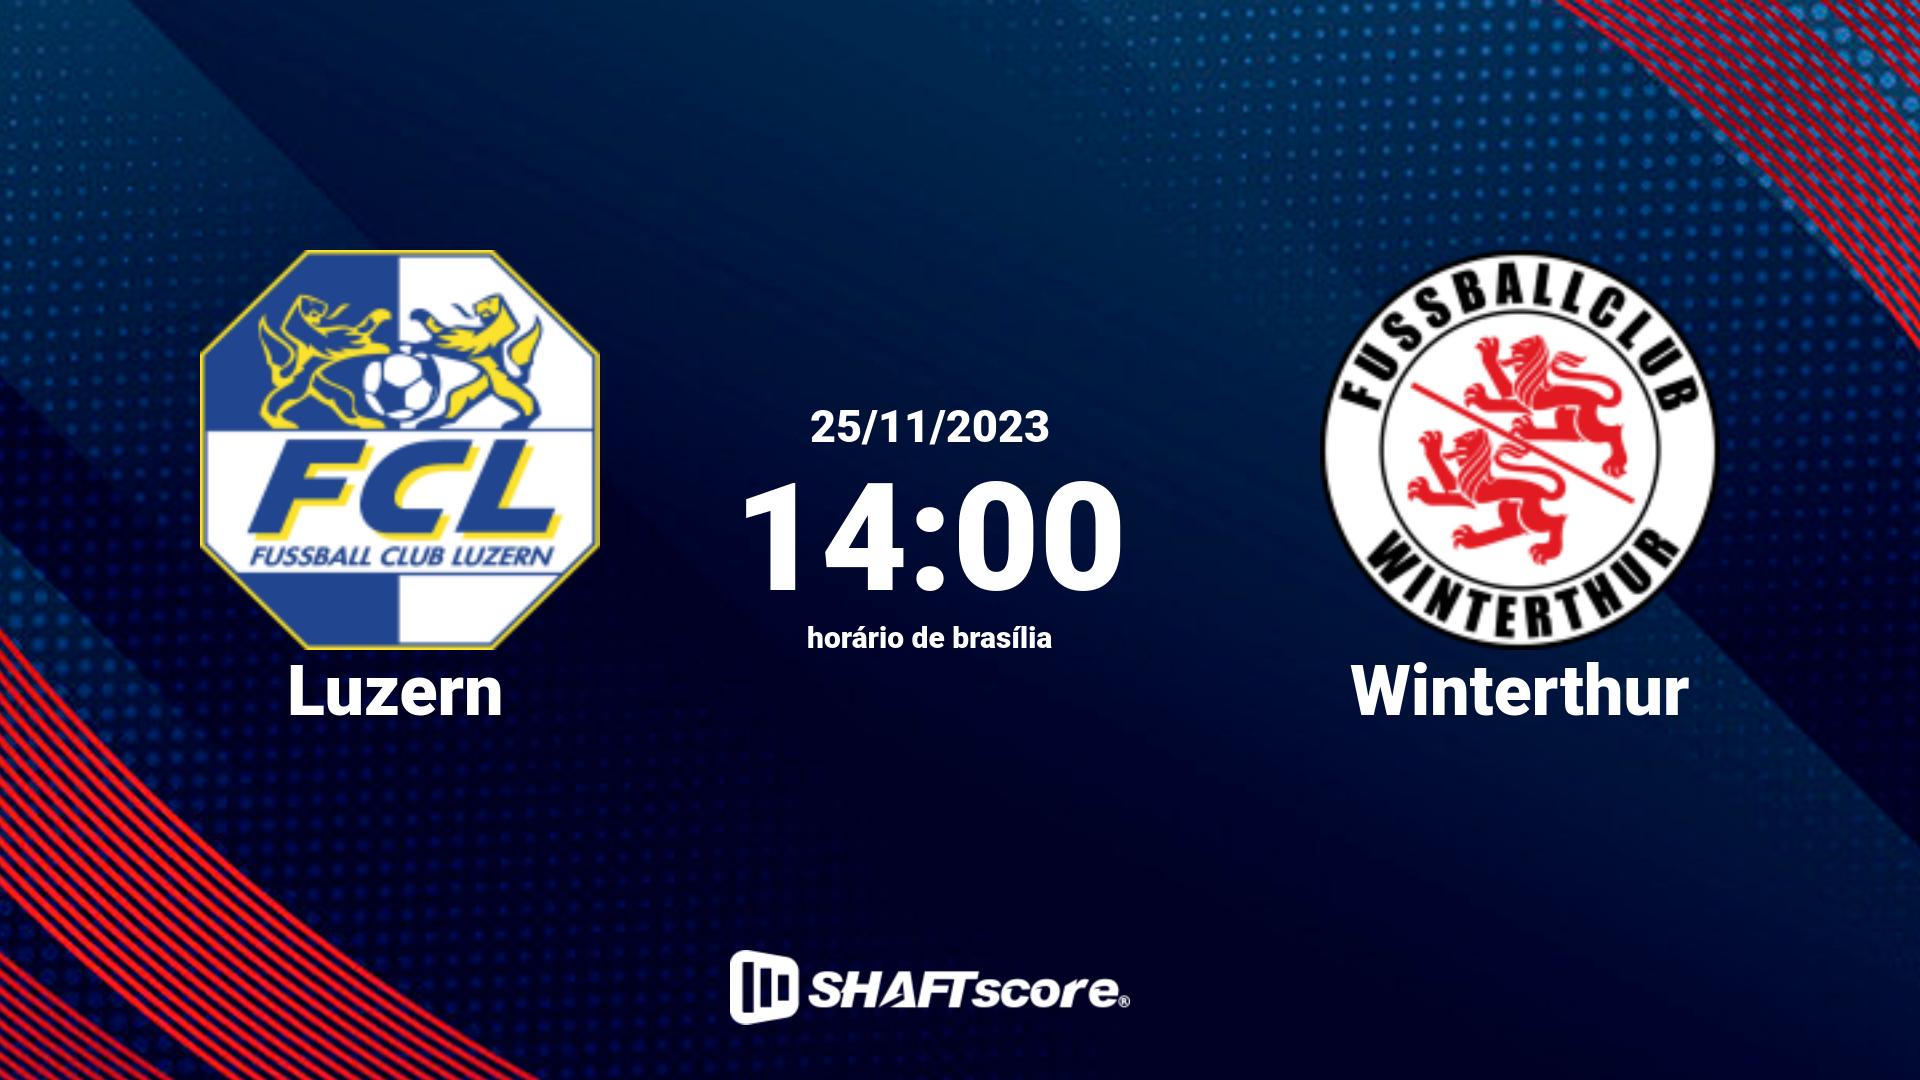 Estatísticas do jogo Luzern vs Winterthur 25.11 14:00